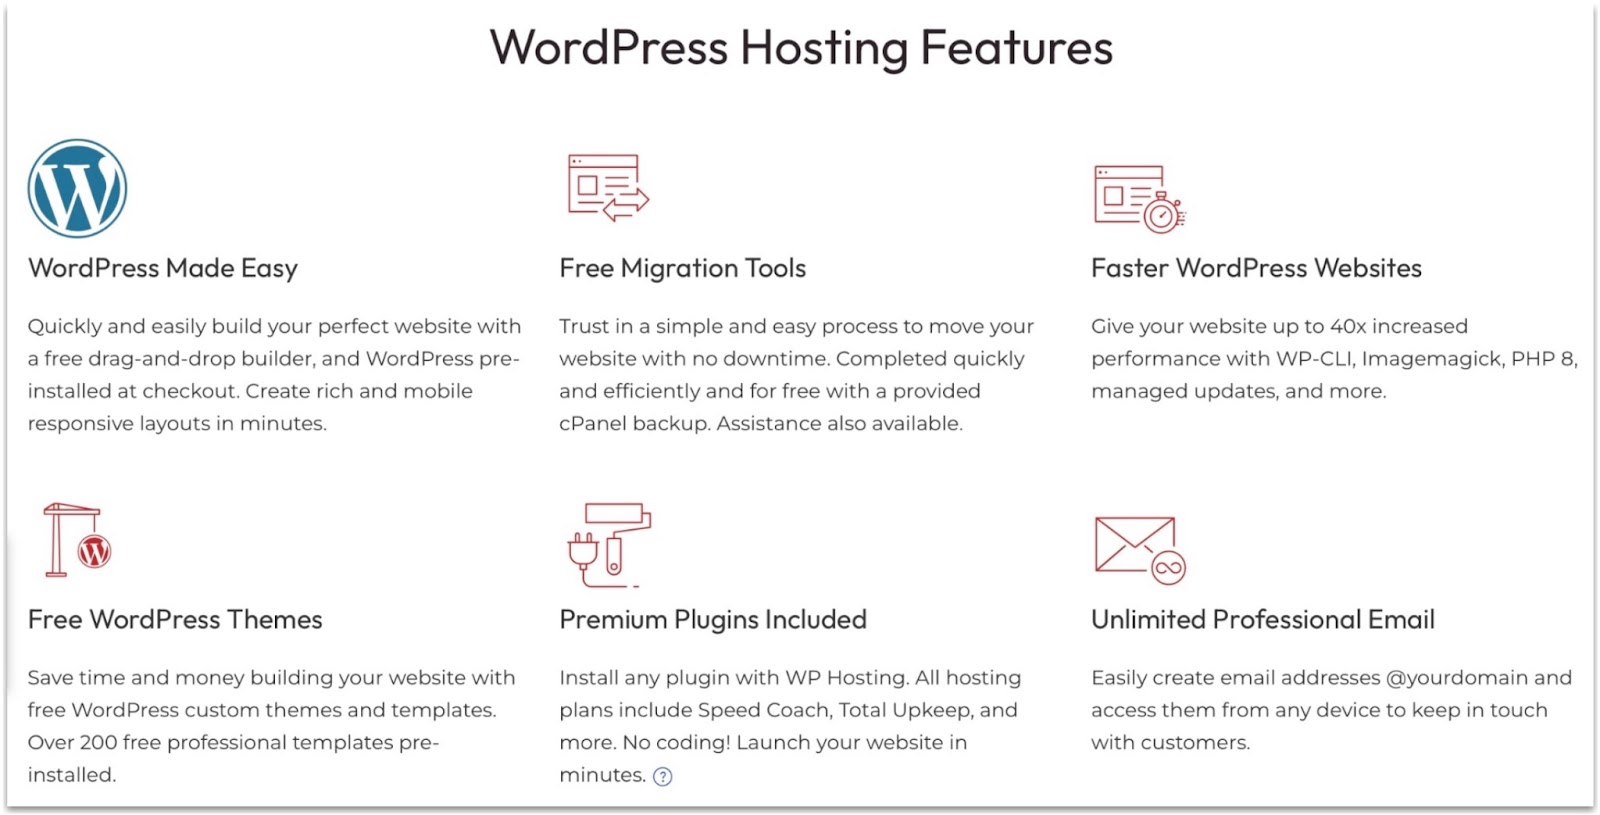 InMotion Hosting's WordPress hosting features